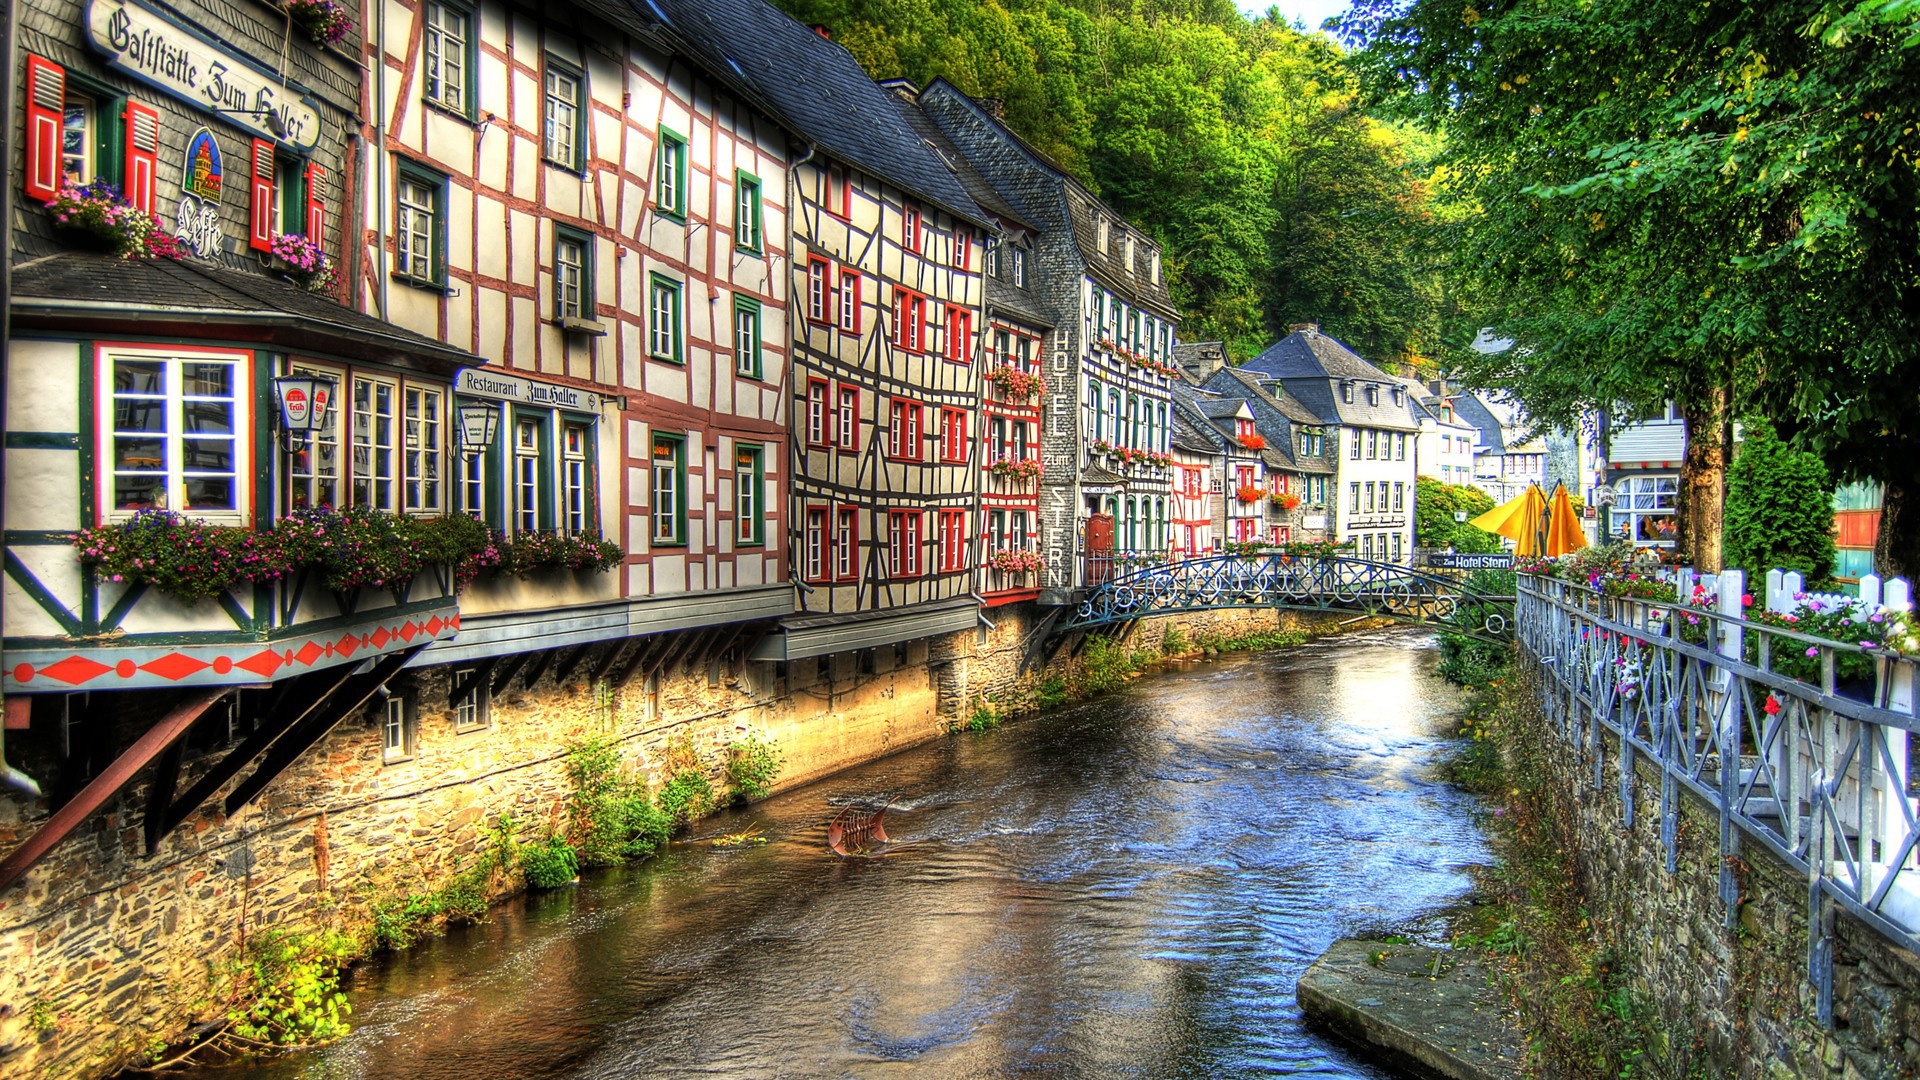 Explore the Eifel town of Monschau